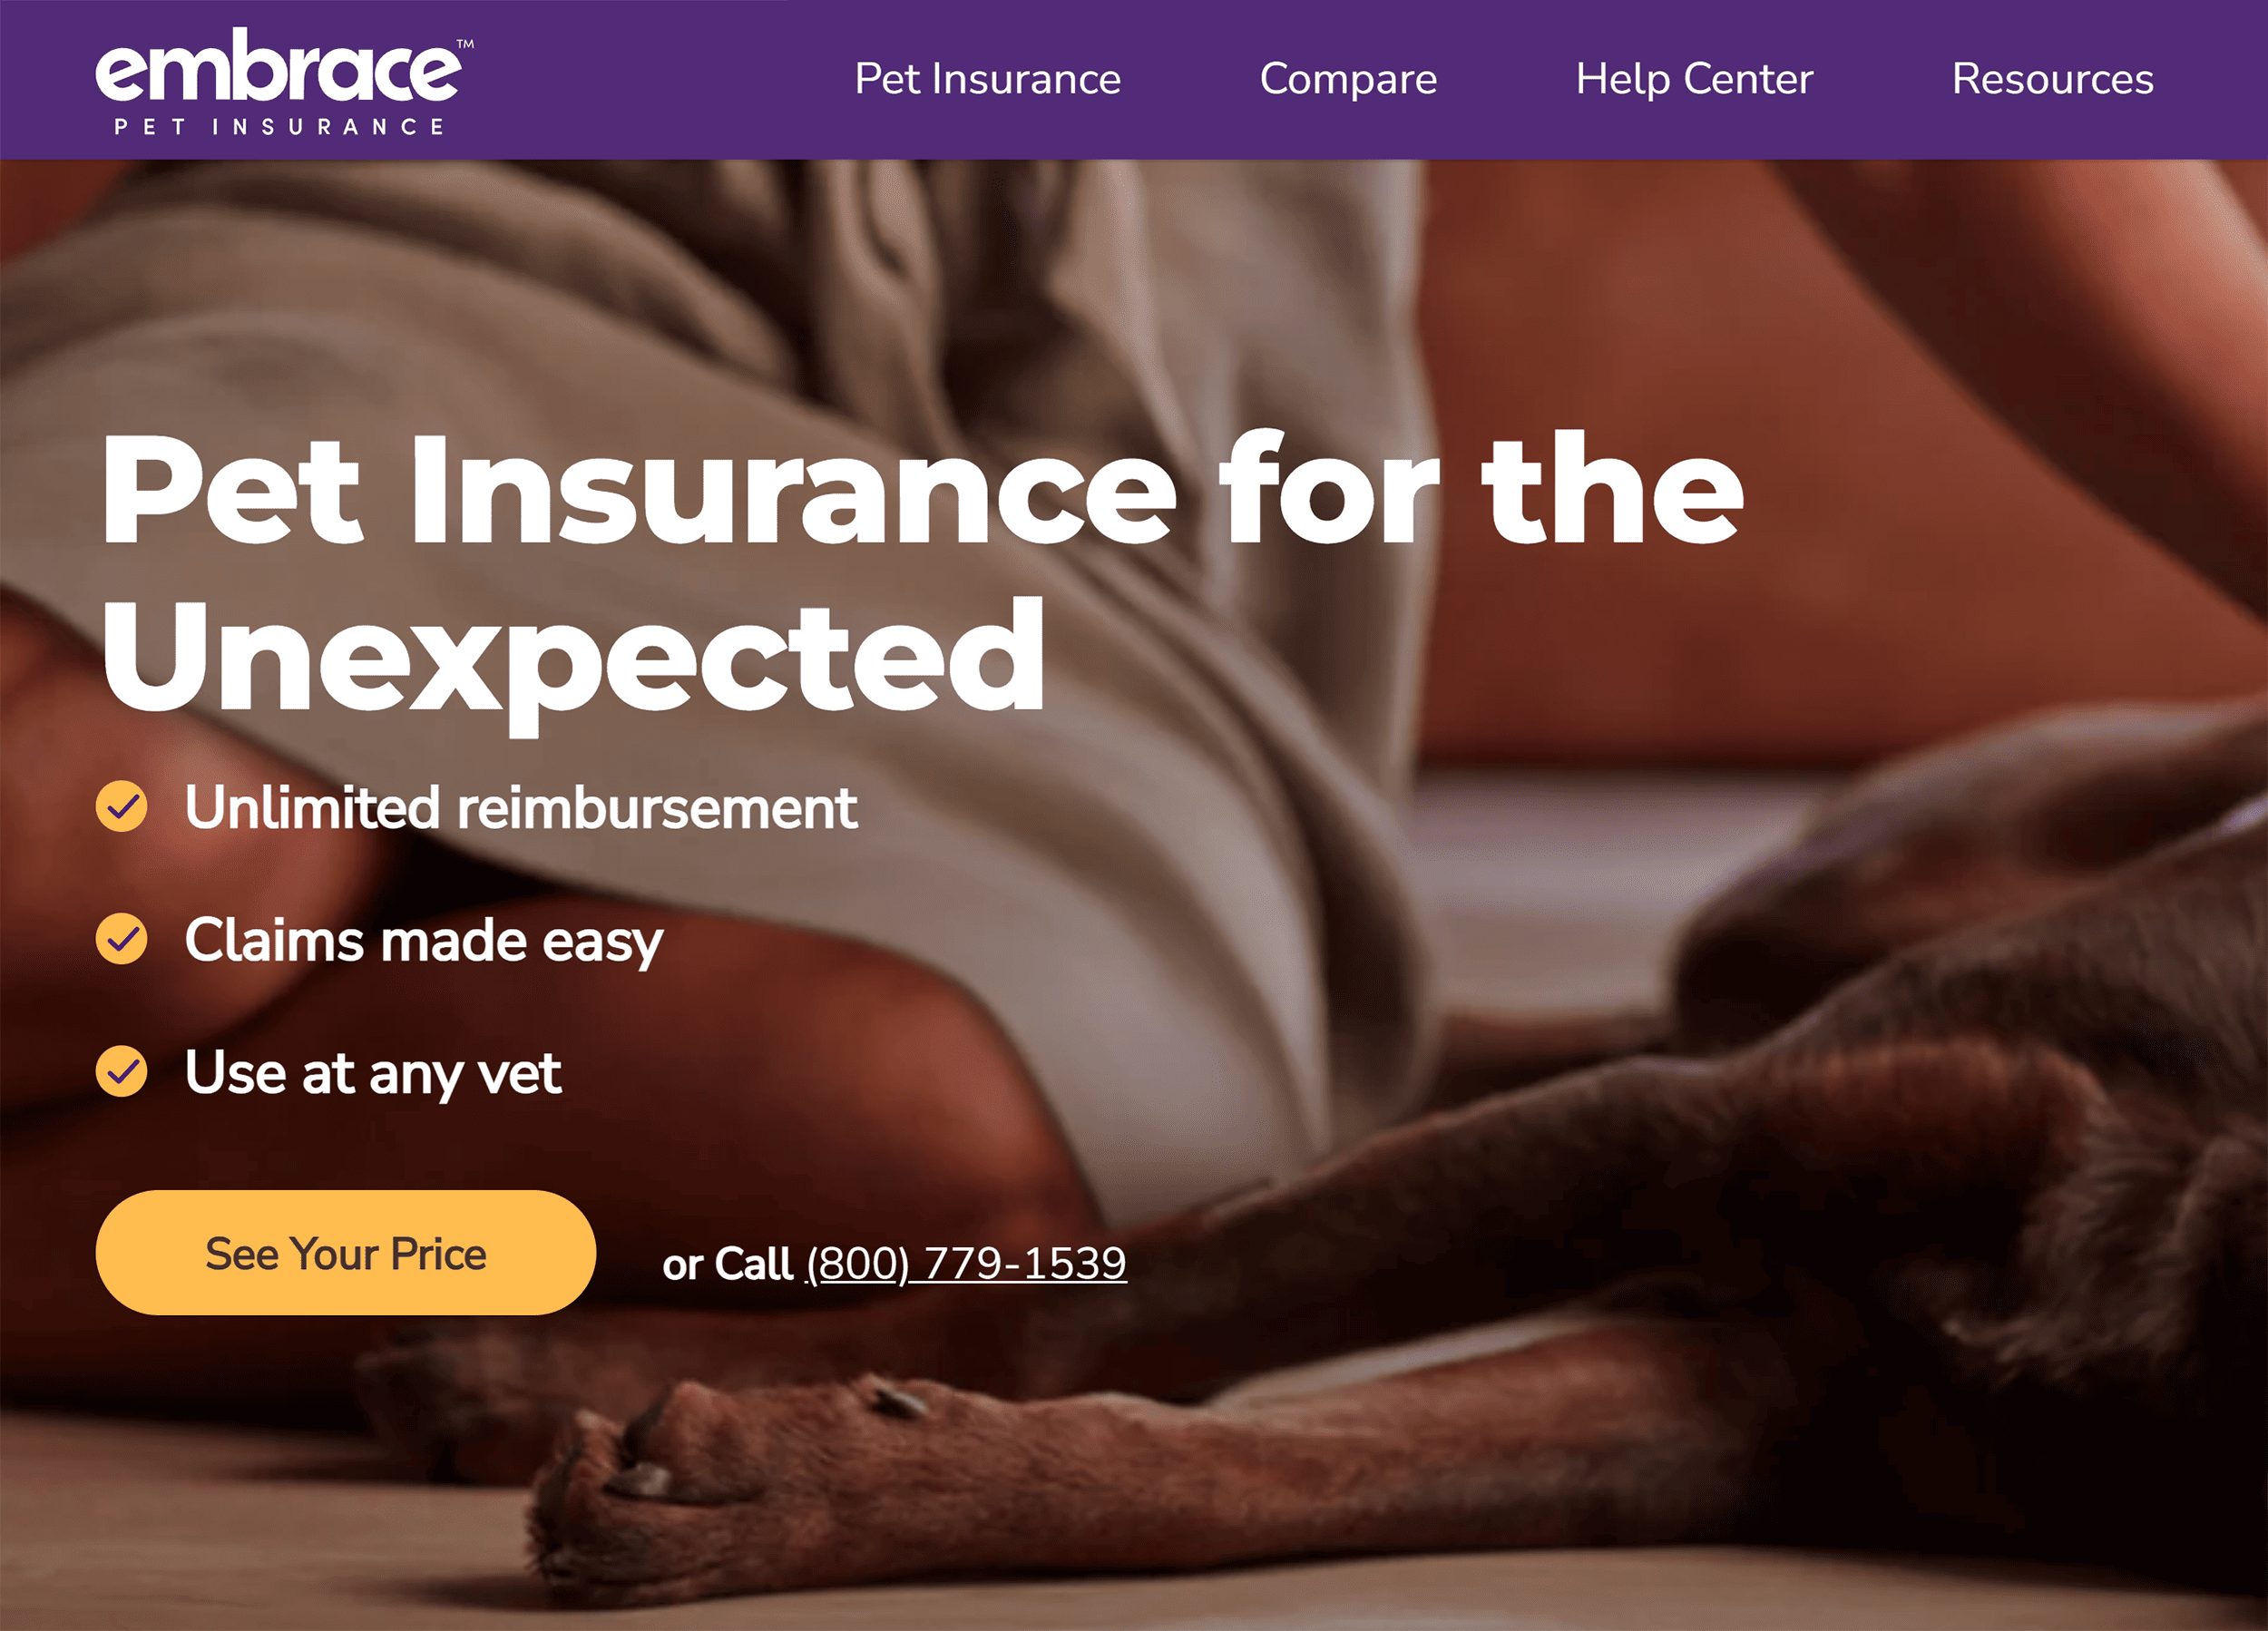 Embrace Pet Insurance Affiliate Program